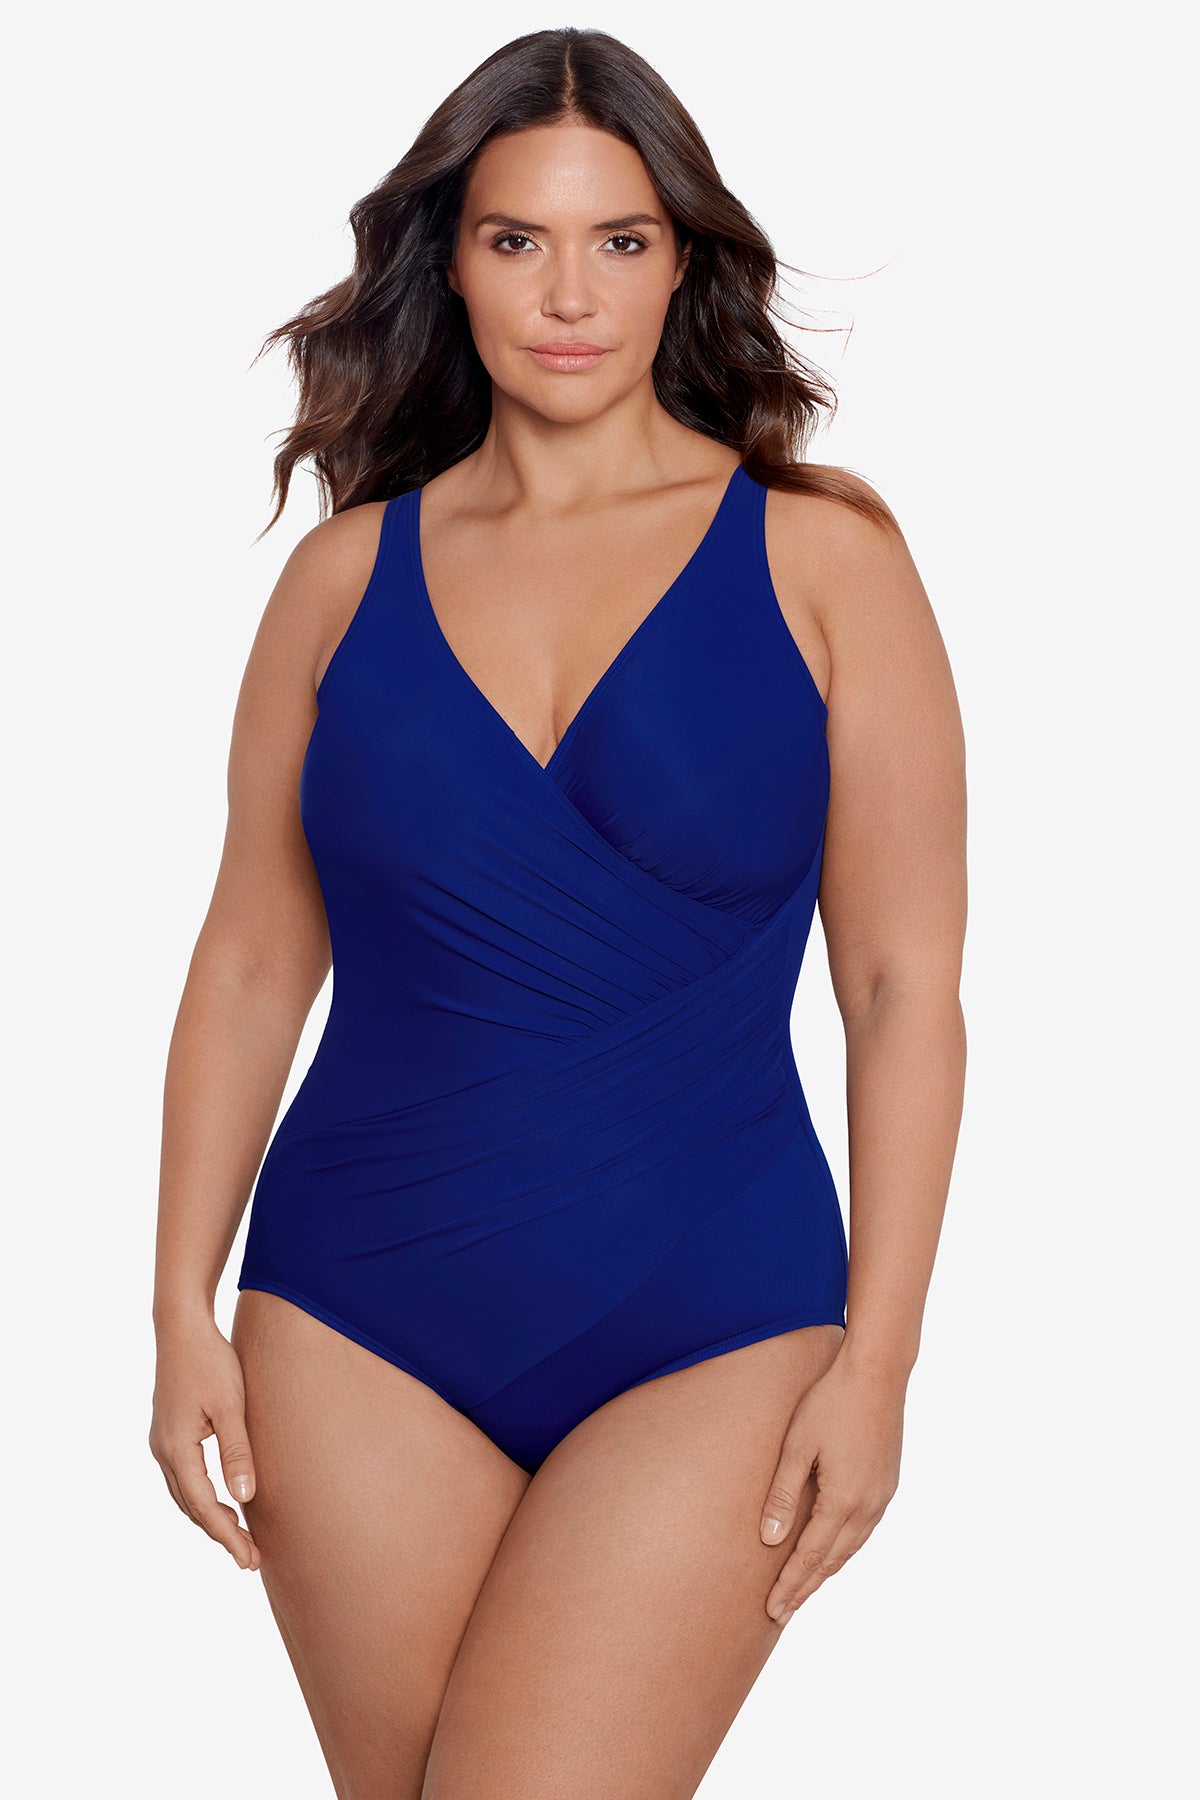 Ecqkame Plus Size Swimsuit for Women One Piece Plunge V Neck Monokini Tummy  Control Swimwear Bathing Suit Green XXL Clearance Items